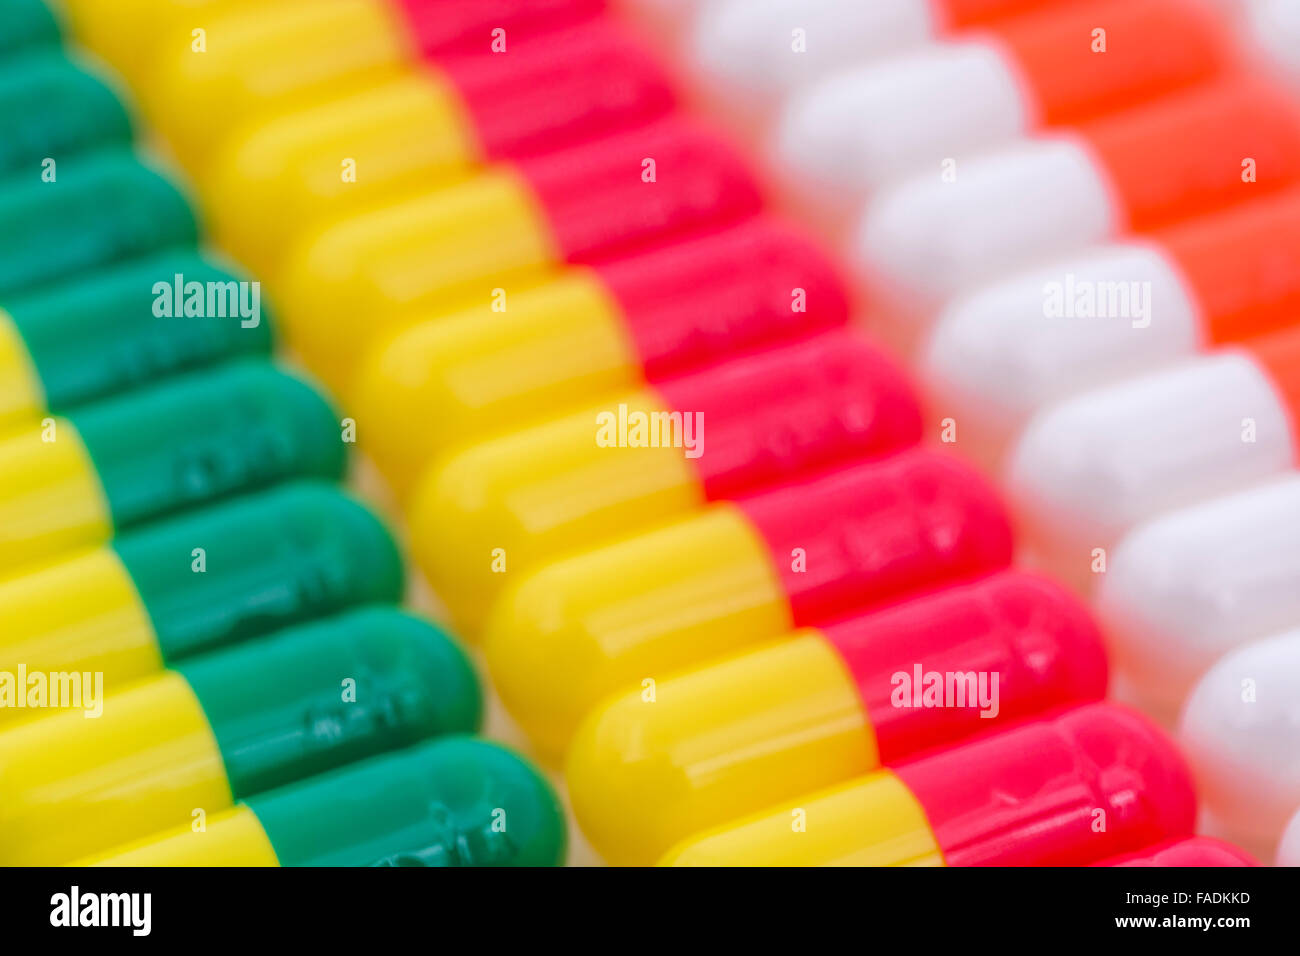 Close-up of pills - capsules made of gelatin. Visual metaphor for consumer choice, markets, market share, diversification, diversity, Big Pharma. Stock Photo